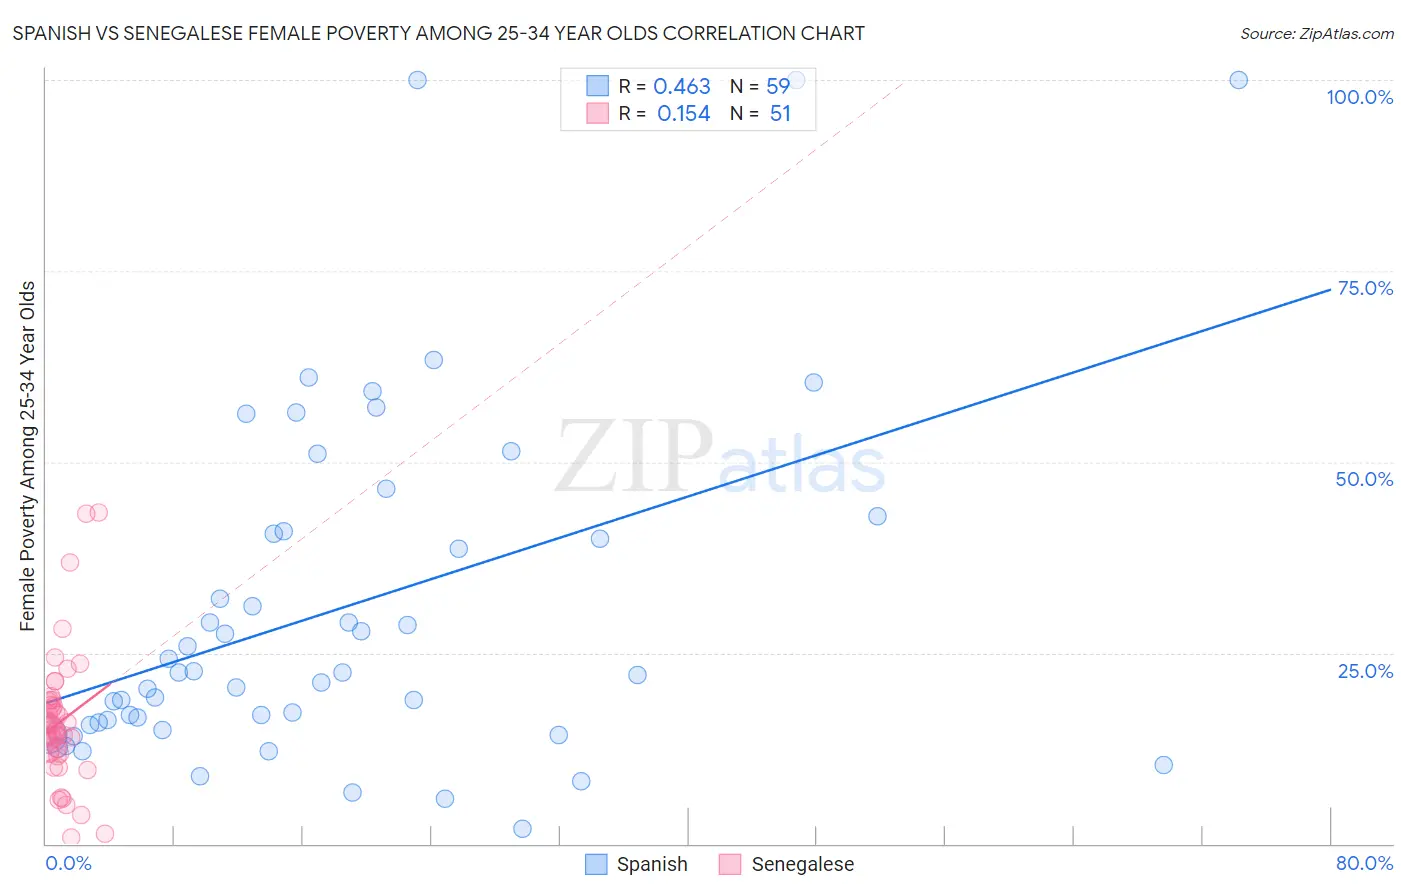 Spanish vs Senegalese Female Poverty Among 25-34 Year Olds